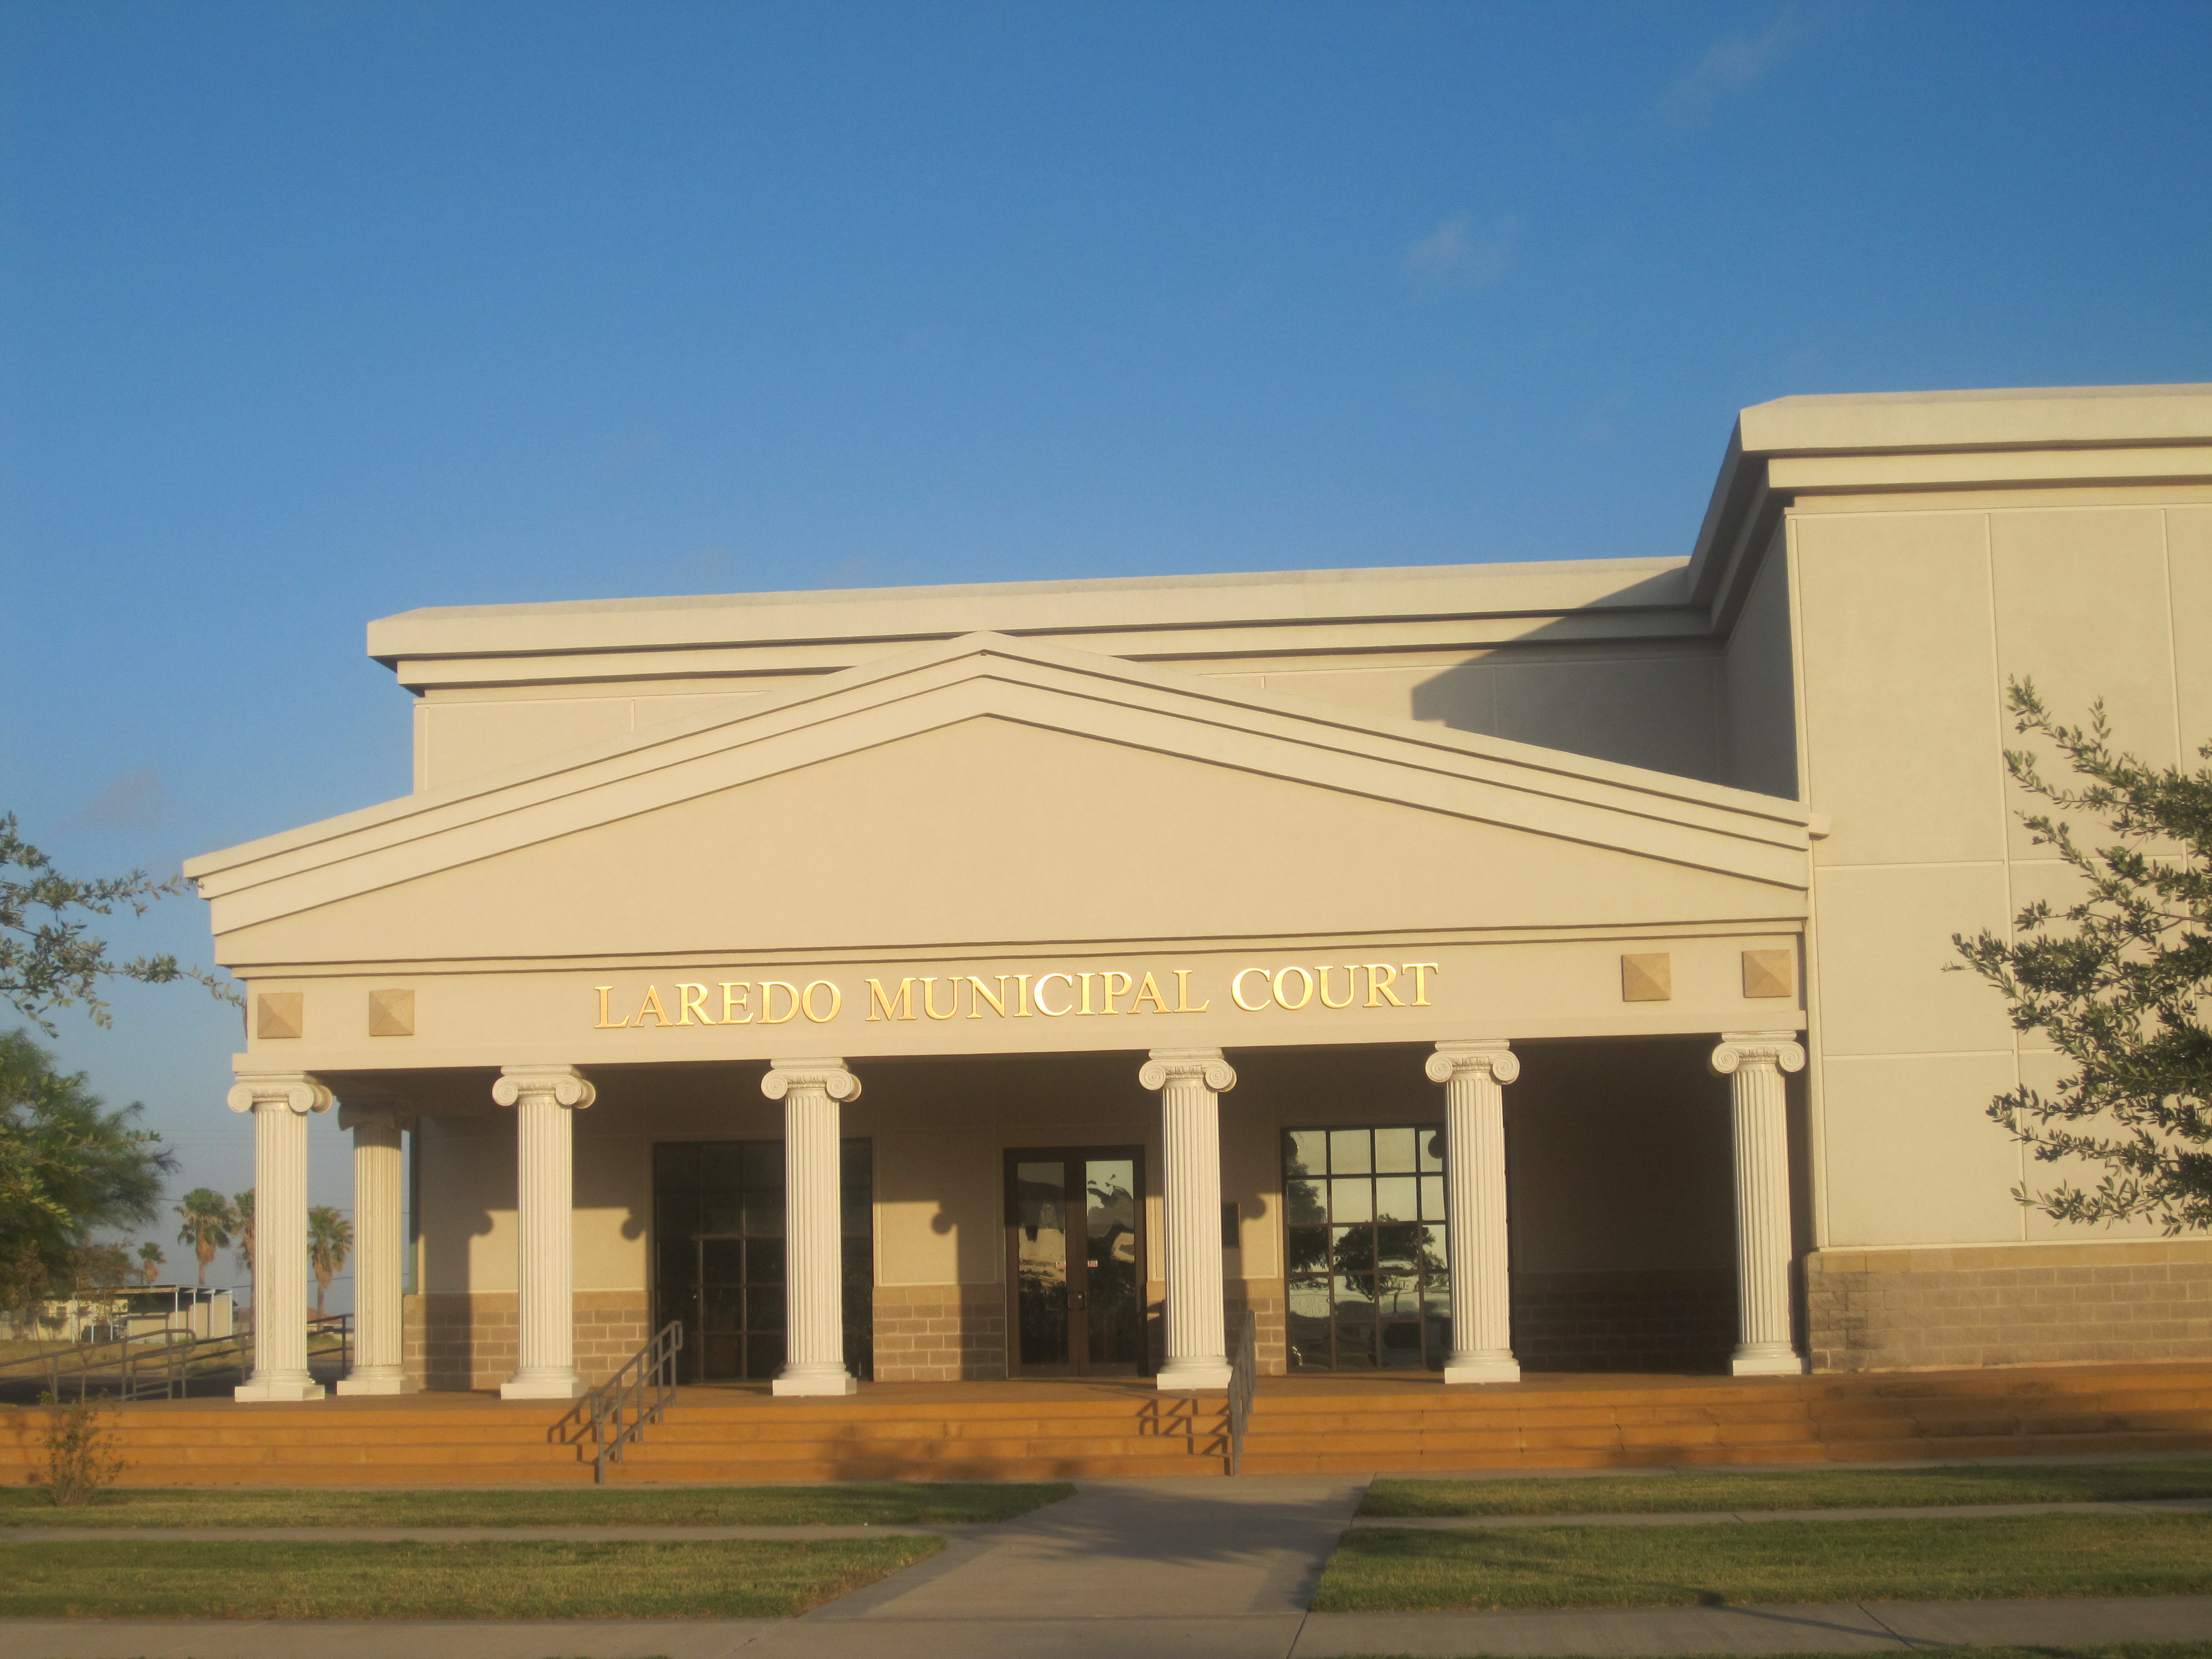 Revised photo, Laredo (TX) Municipal Court IMG 0806.JPG. en:user:Billy Hath...